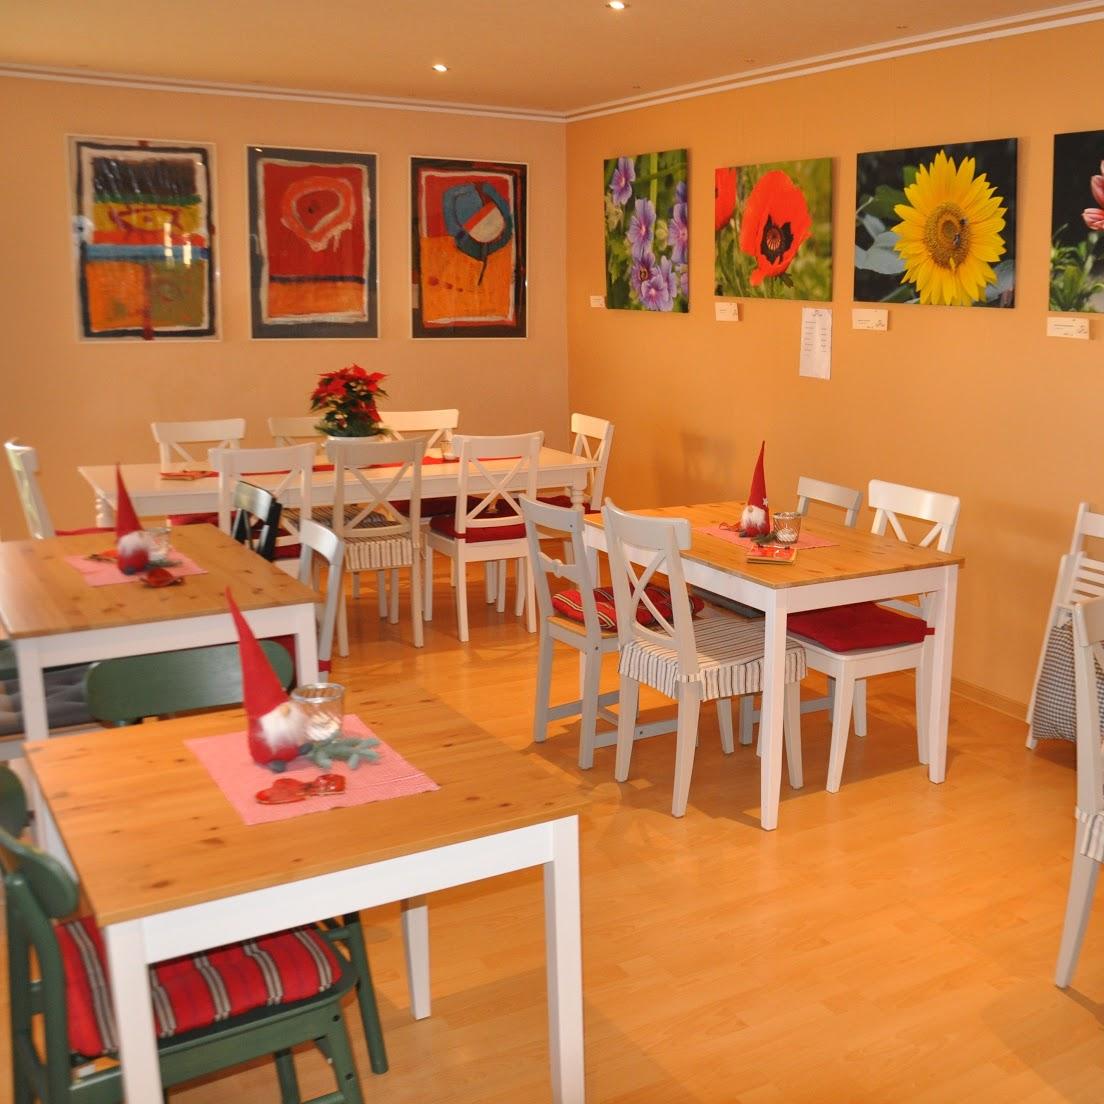 Restaurant "Café Duda" in Tholey